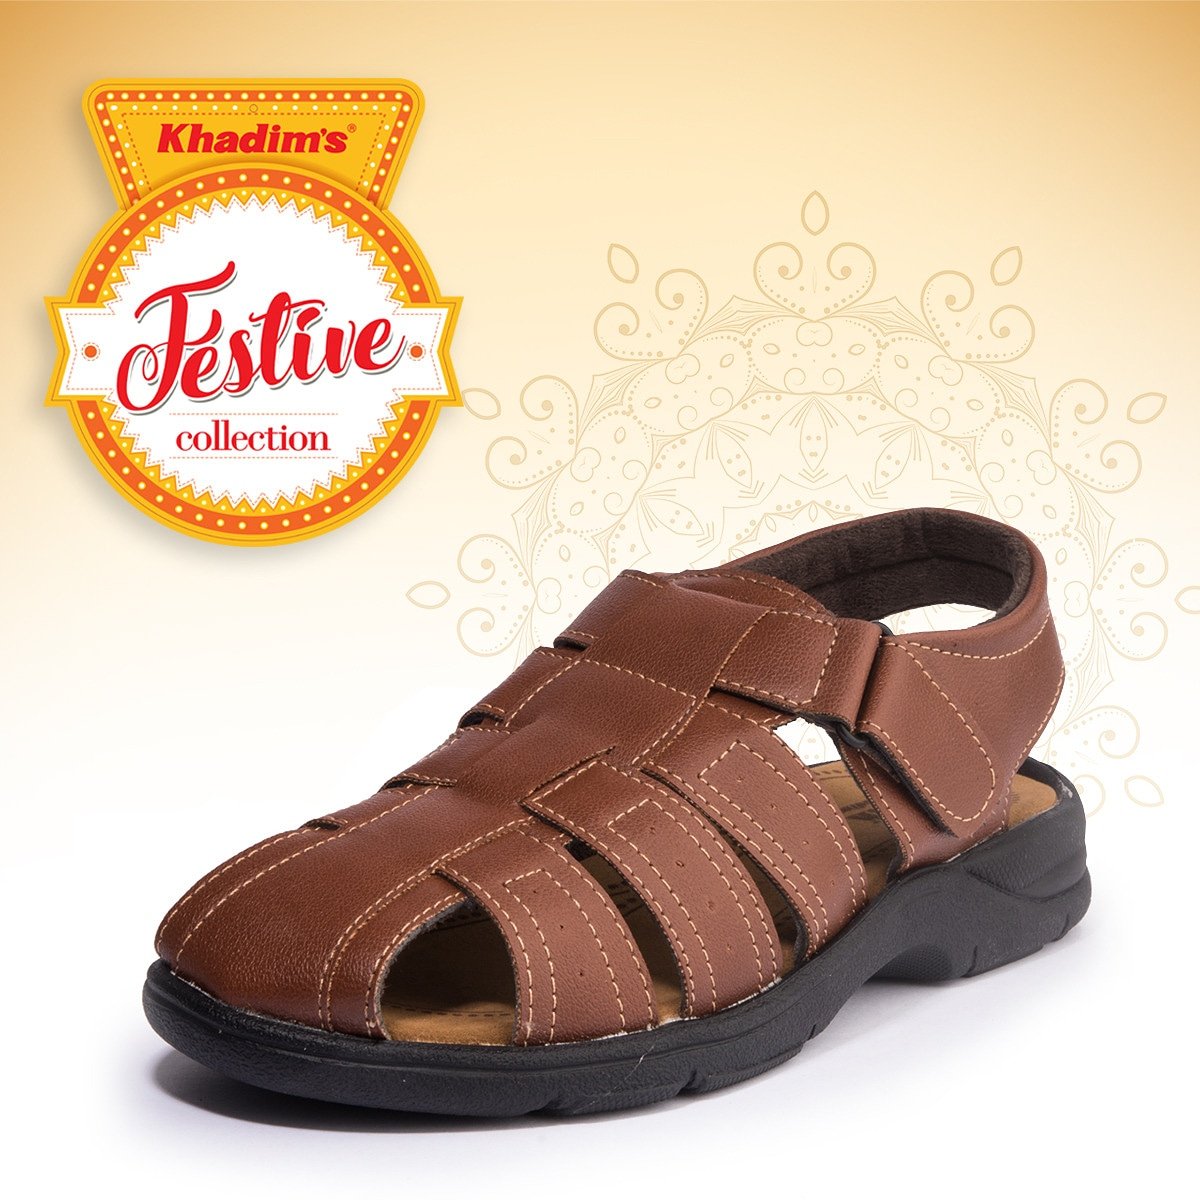 khadim leather sandals